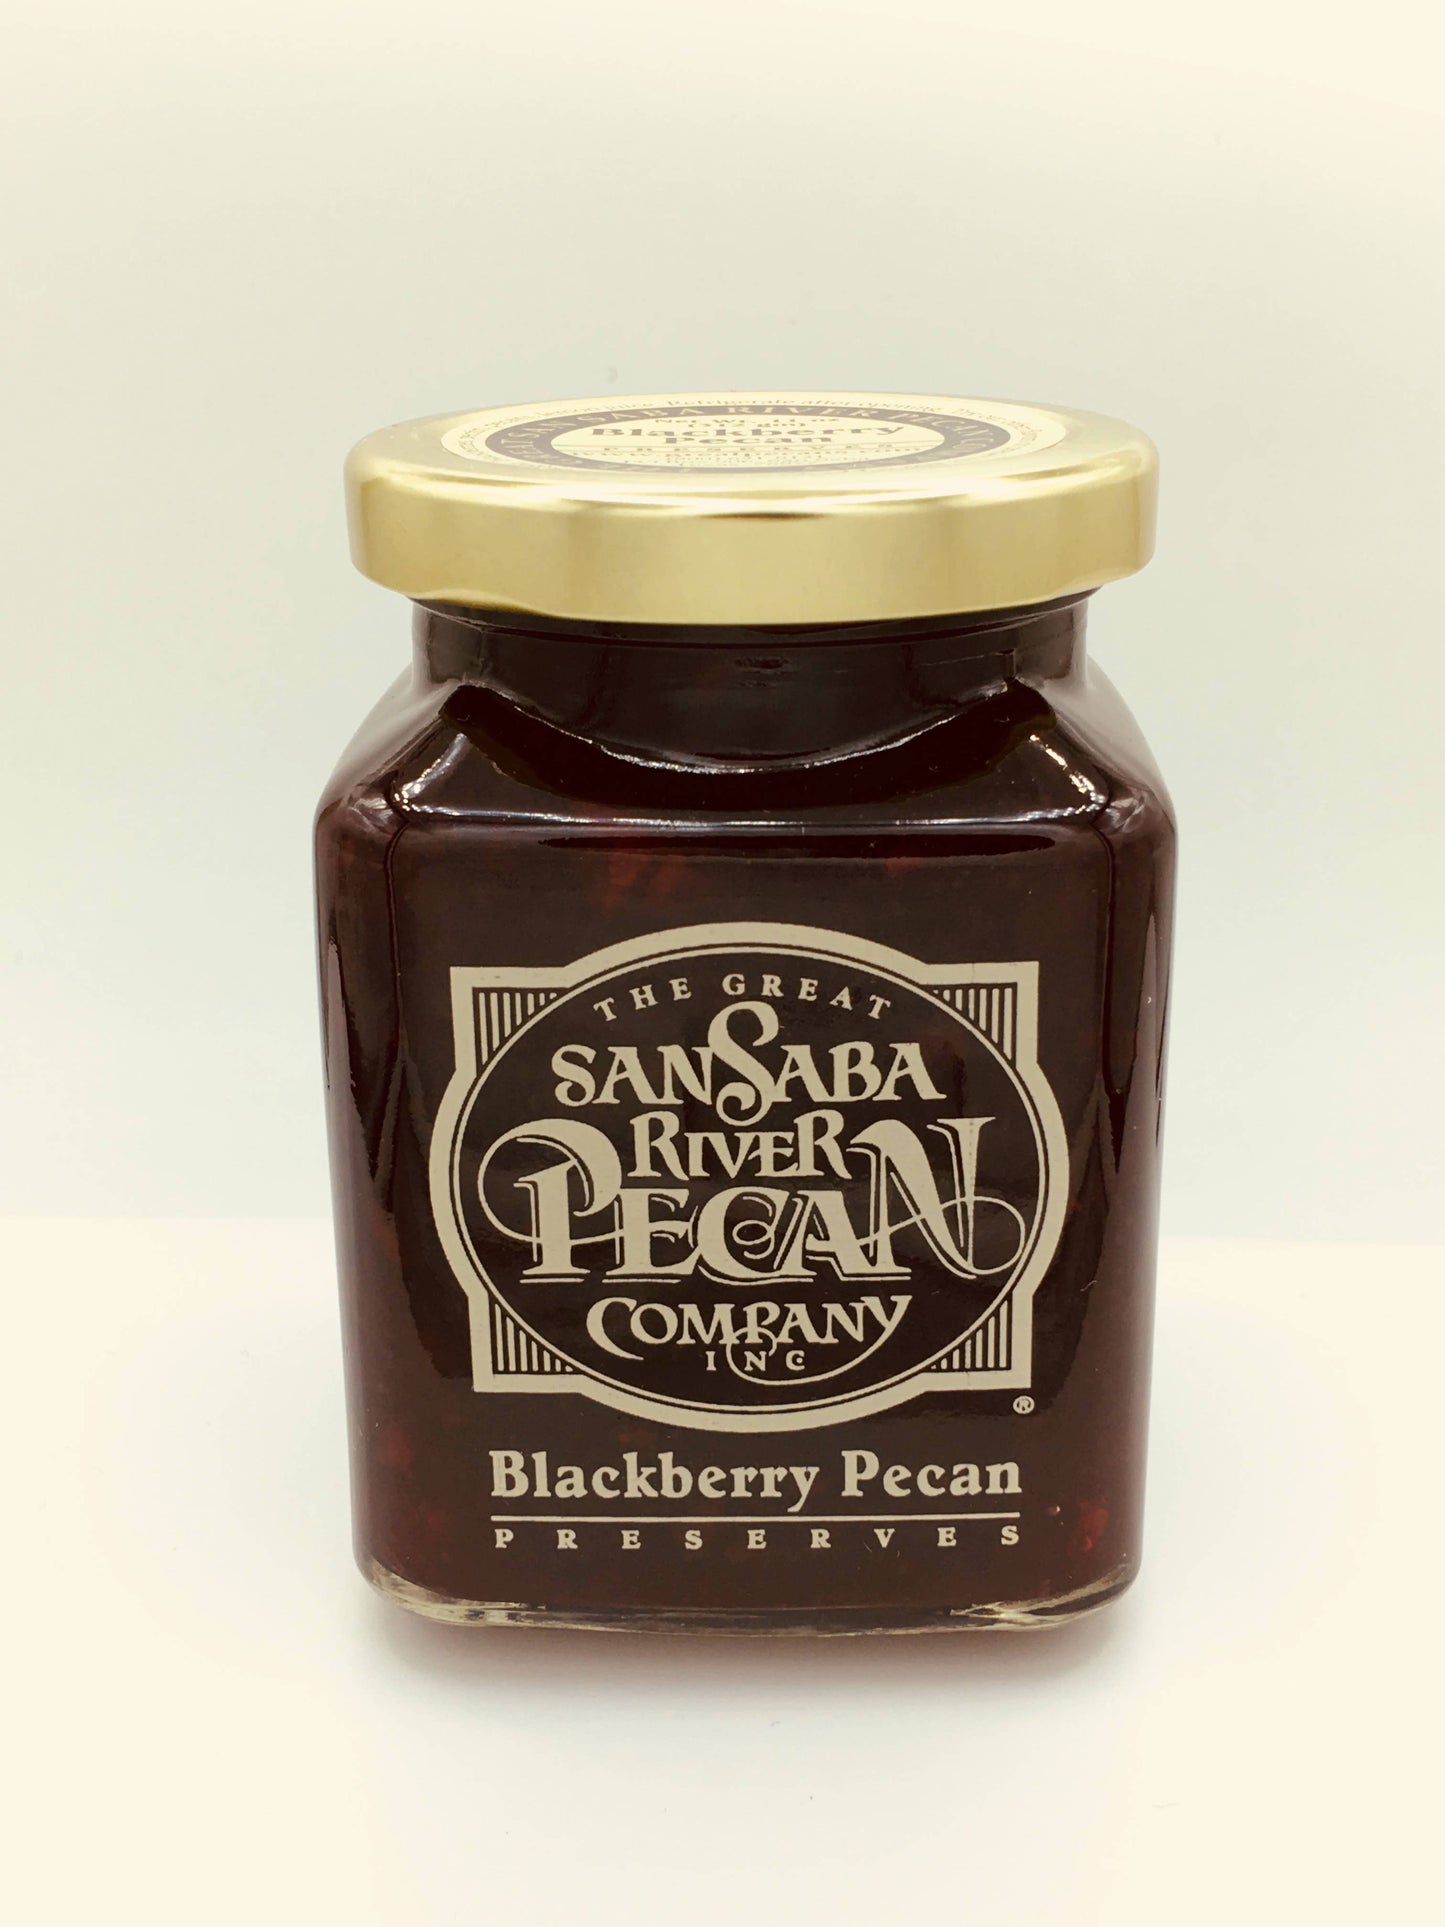 THE GREAT SAN SABA RIVER PECAN CO - PRESERVES: Apple Pecan Preserves / Large Jars (11 oz)